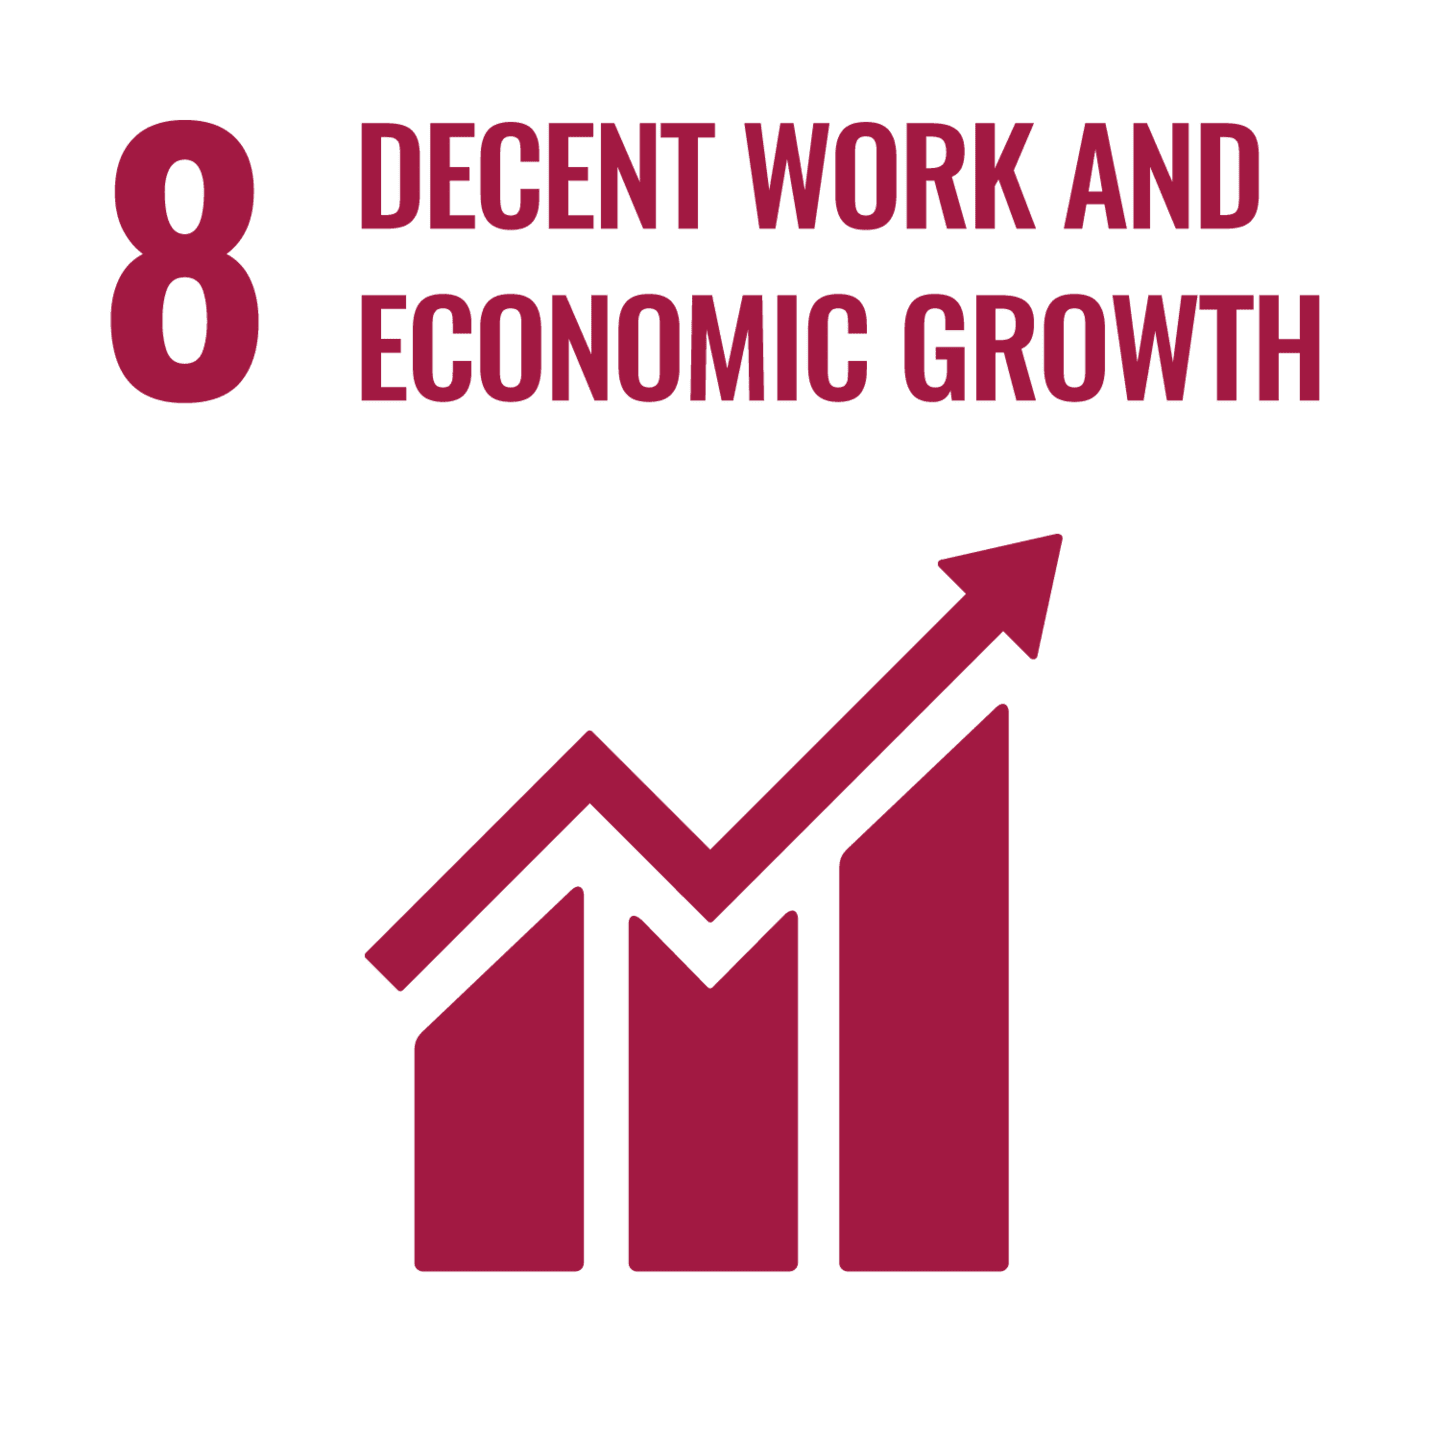 UN Sustainable Development Goal 8: Decent Work and Economic Growth